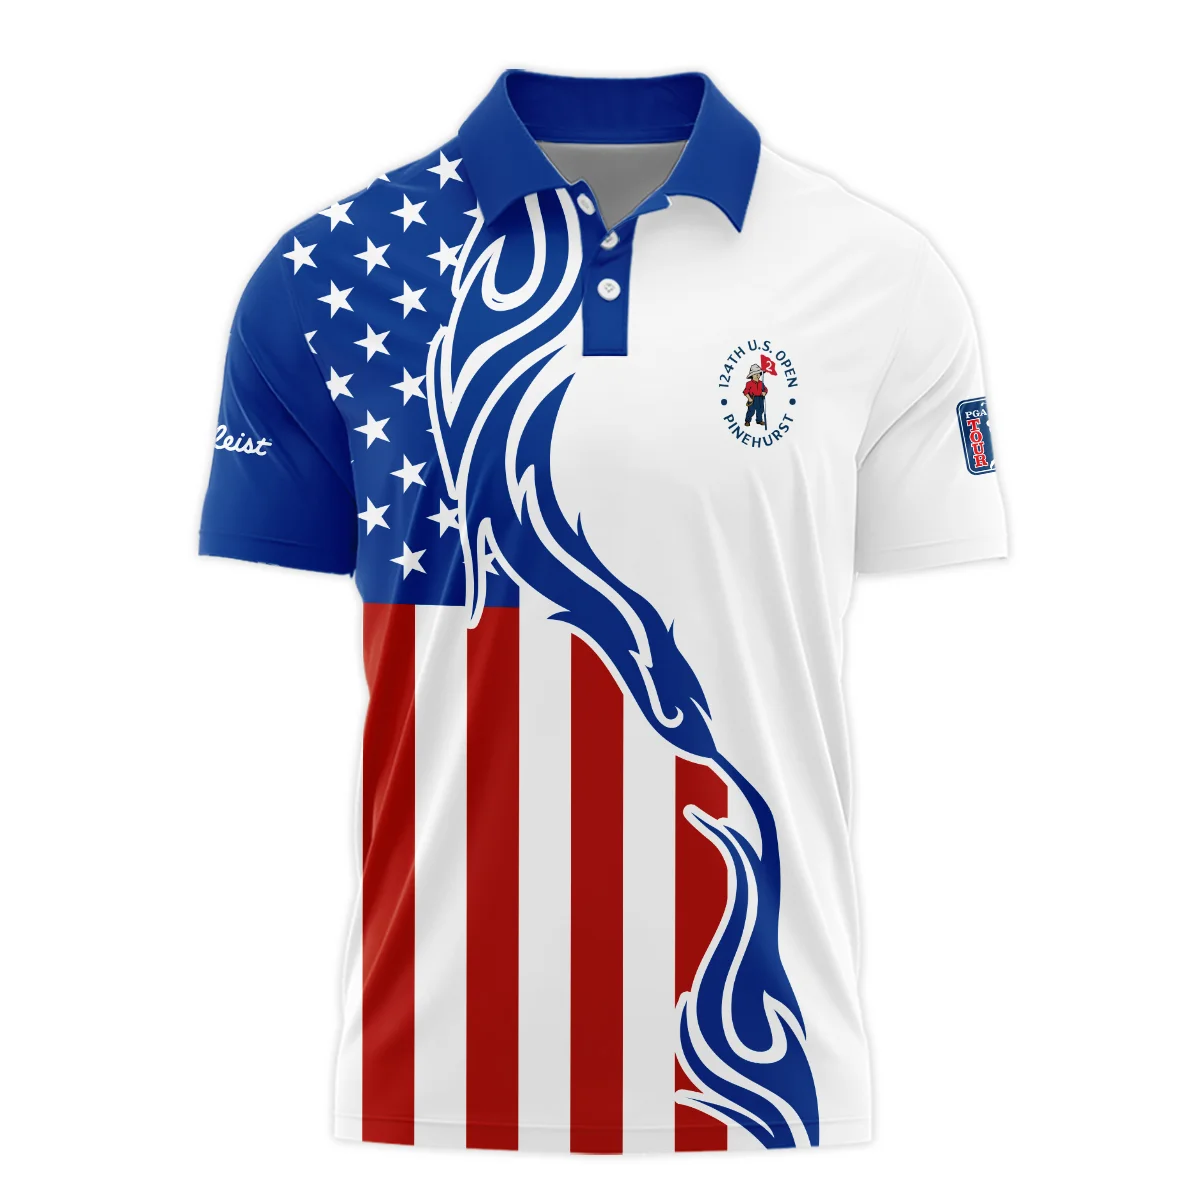 Golf Sport Titleist 124th U.S. Open Pinehurst Unisex Sweatshirt USA Flag Pattern Blue White All Over Print Sweatshirt